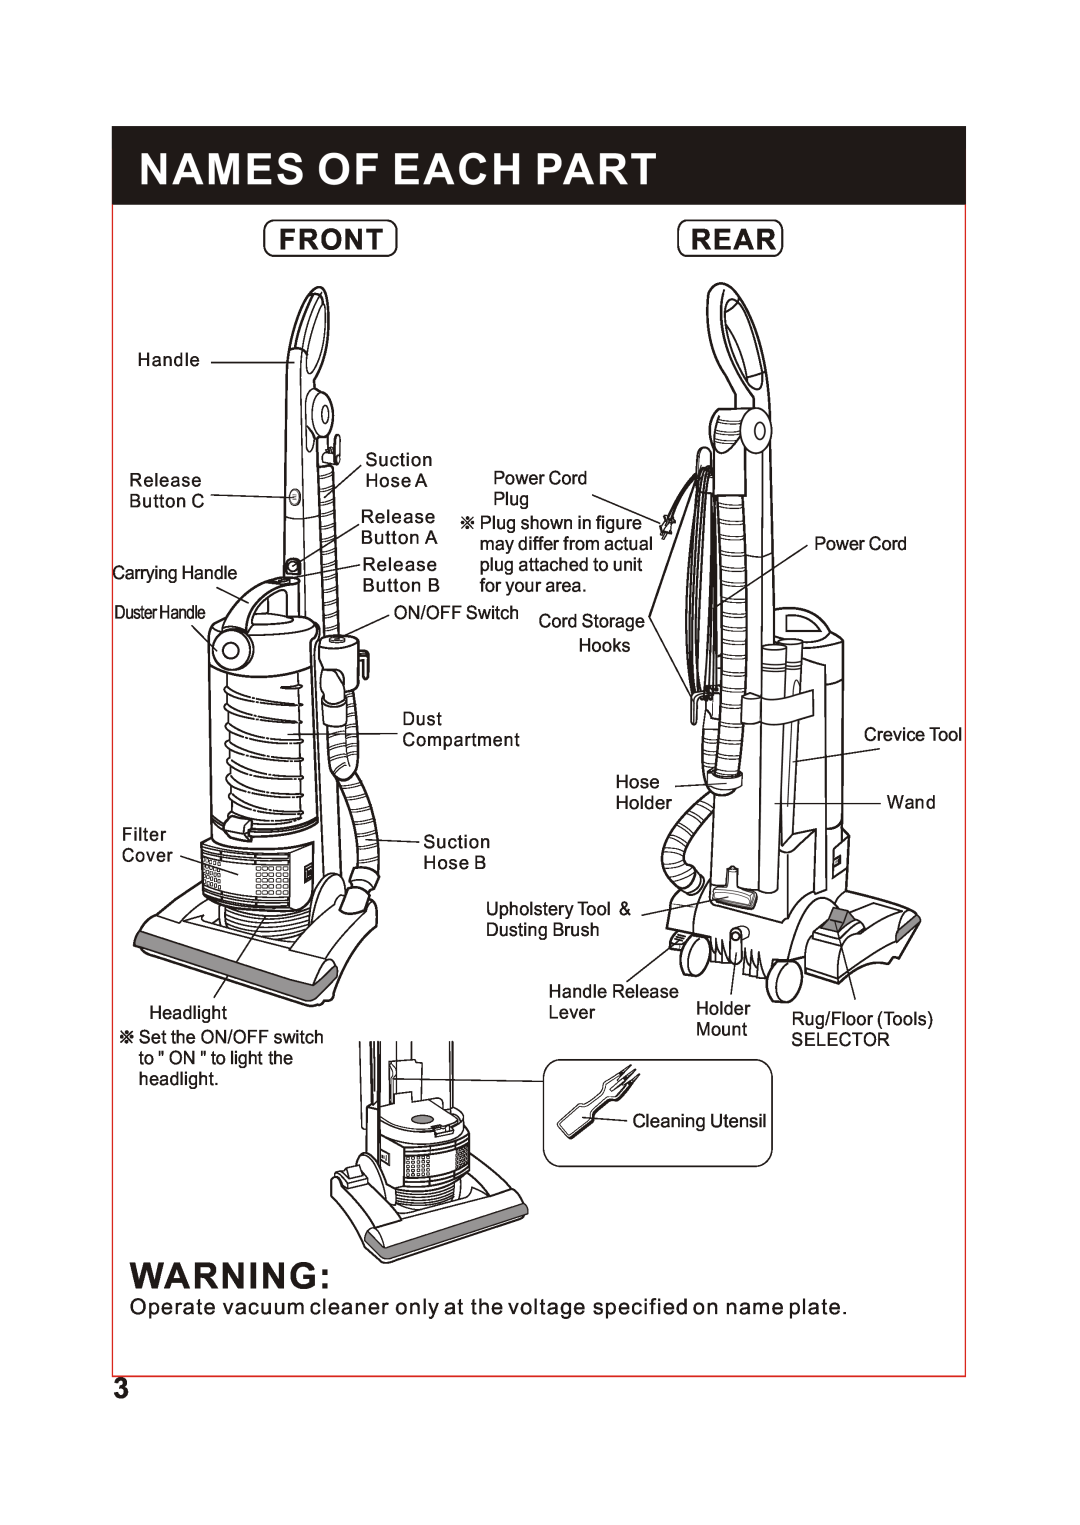 Fantom Vacuum FM741 instruction manual Names Of Each Part, Frontrear 